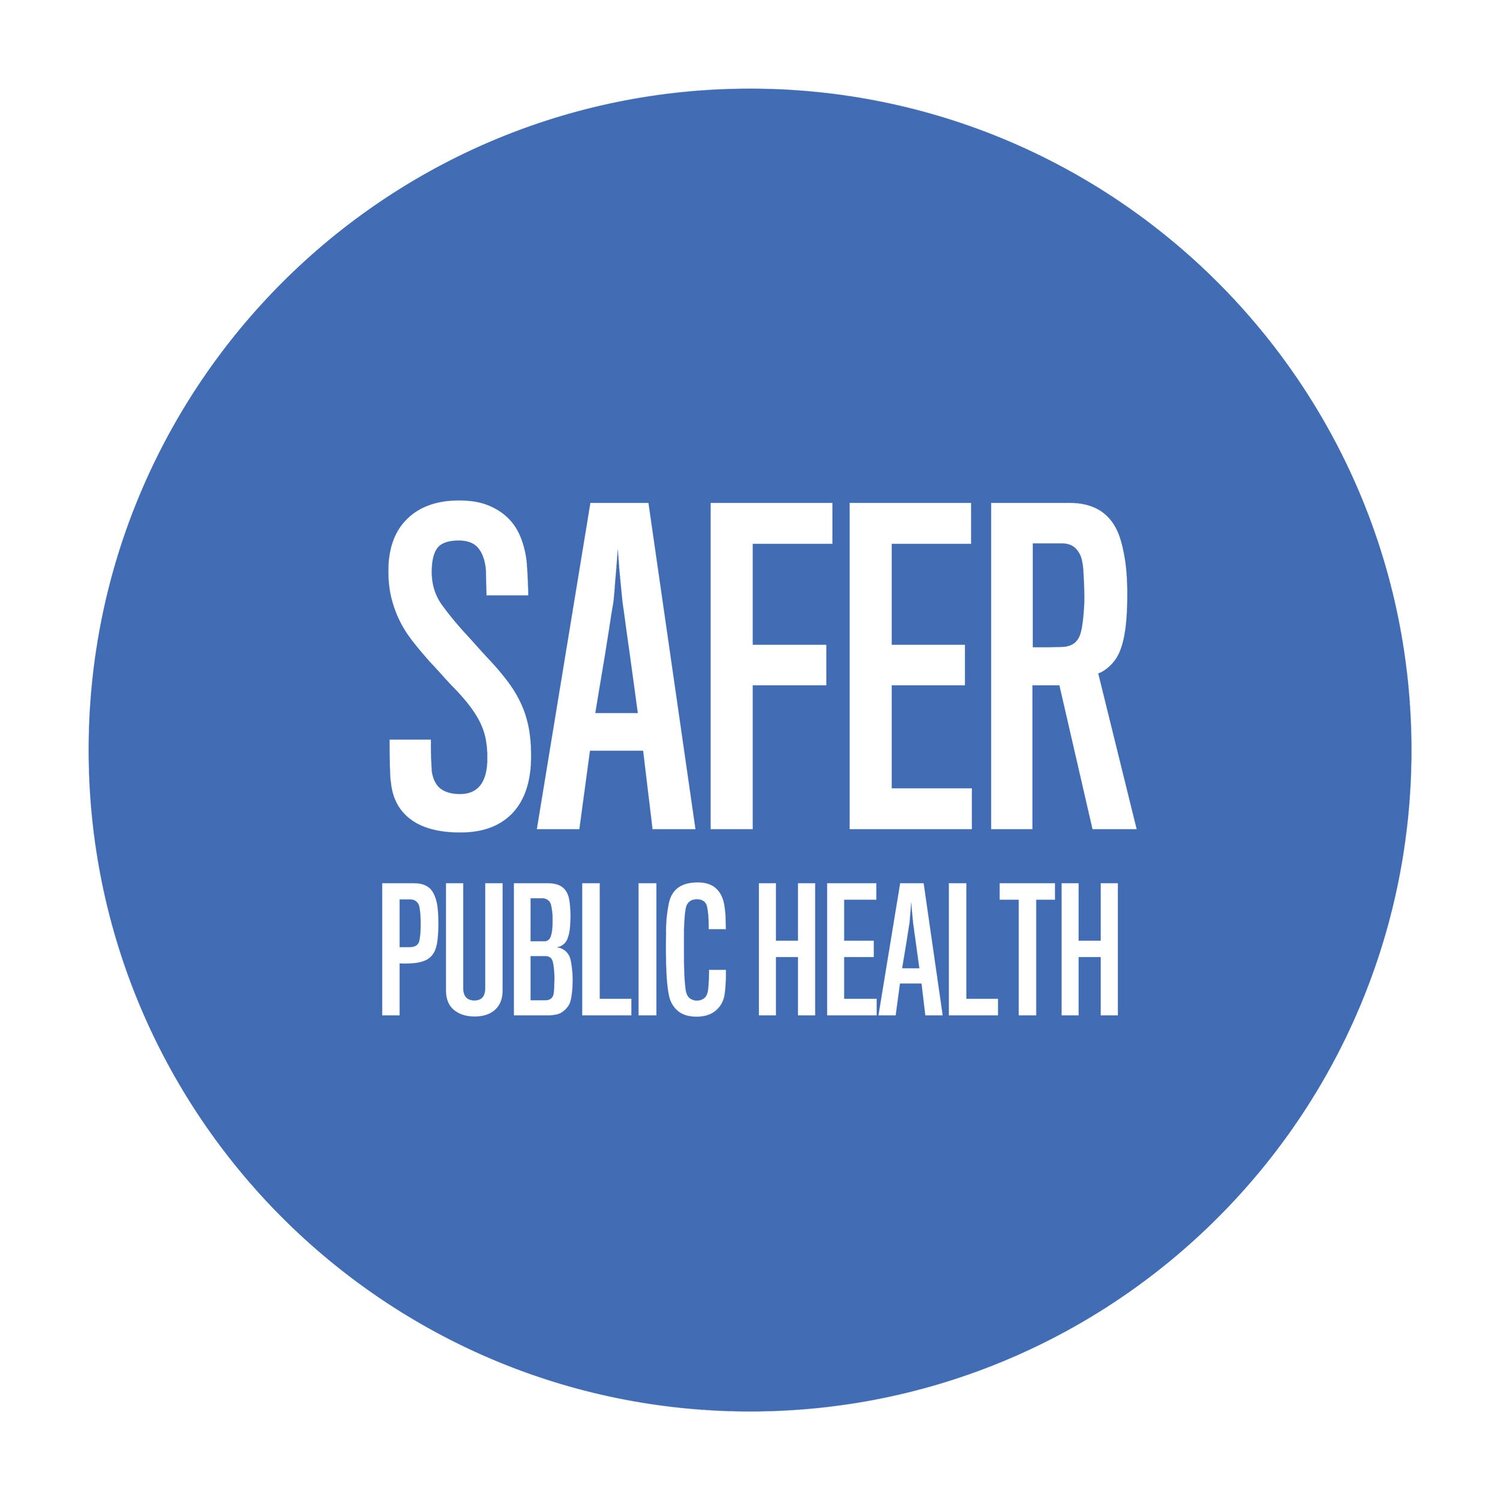 Safer Public Health